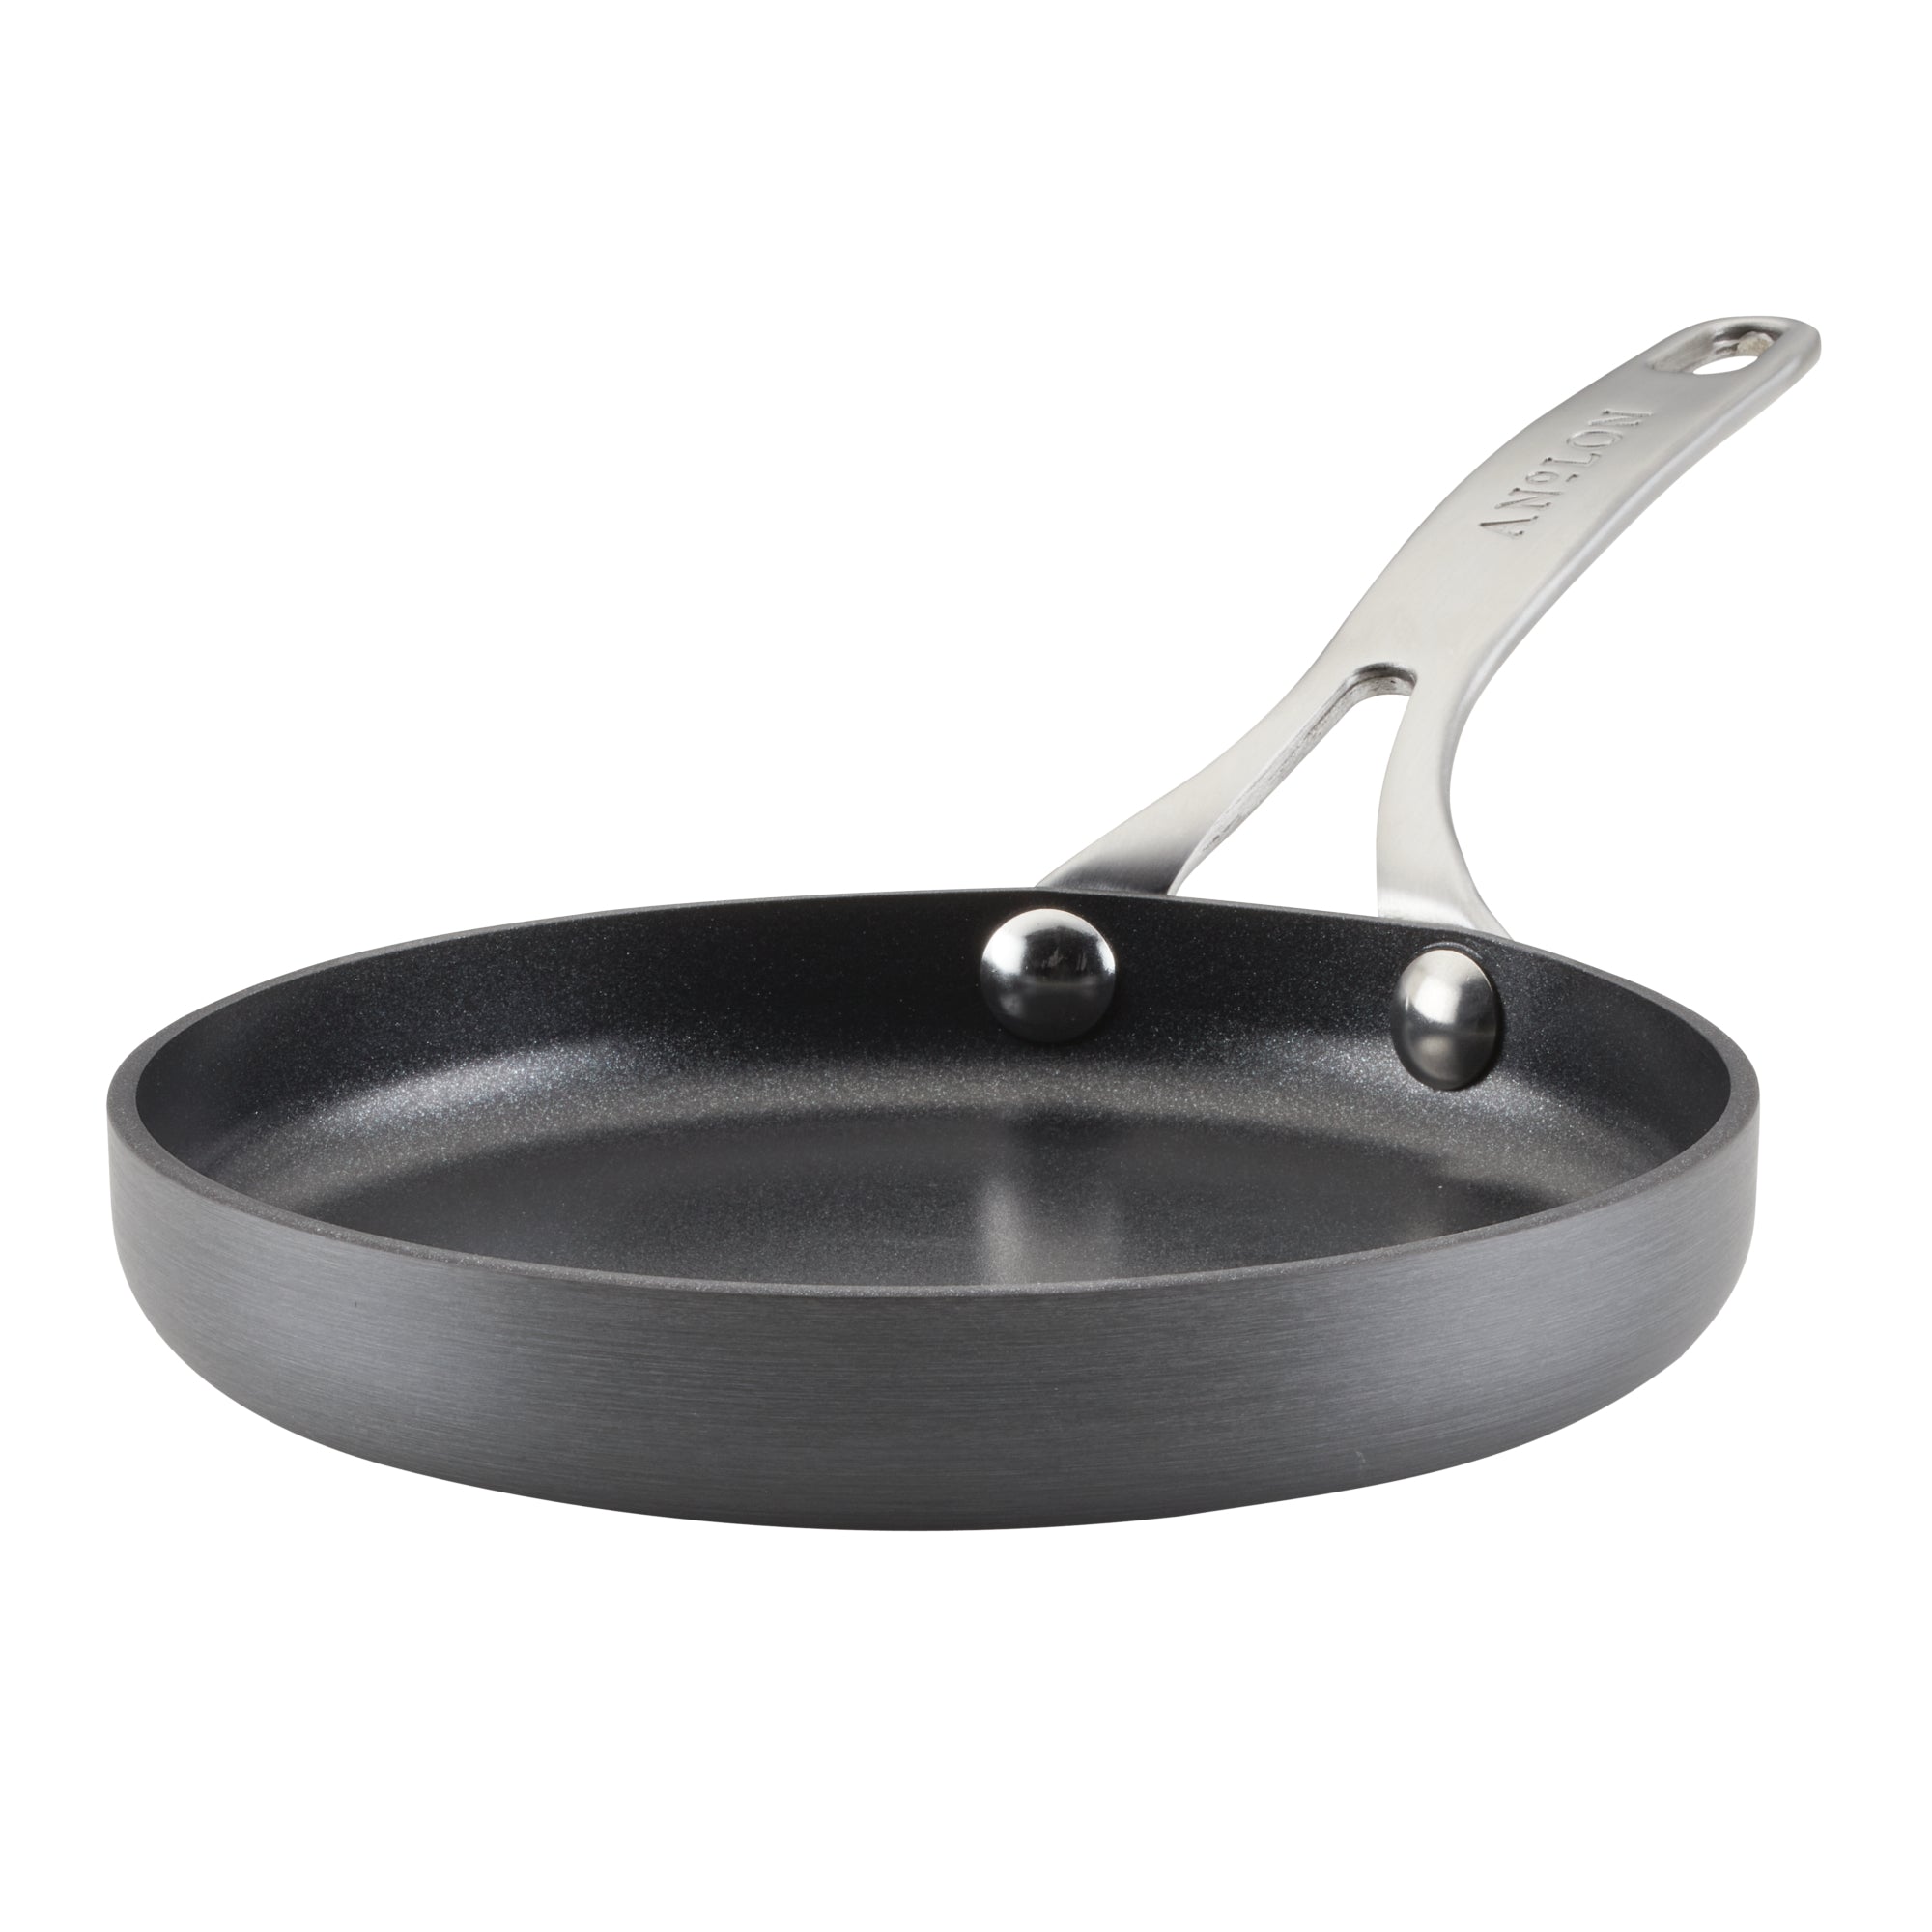 Stainless Steel Mini Fry Pan